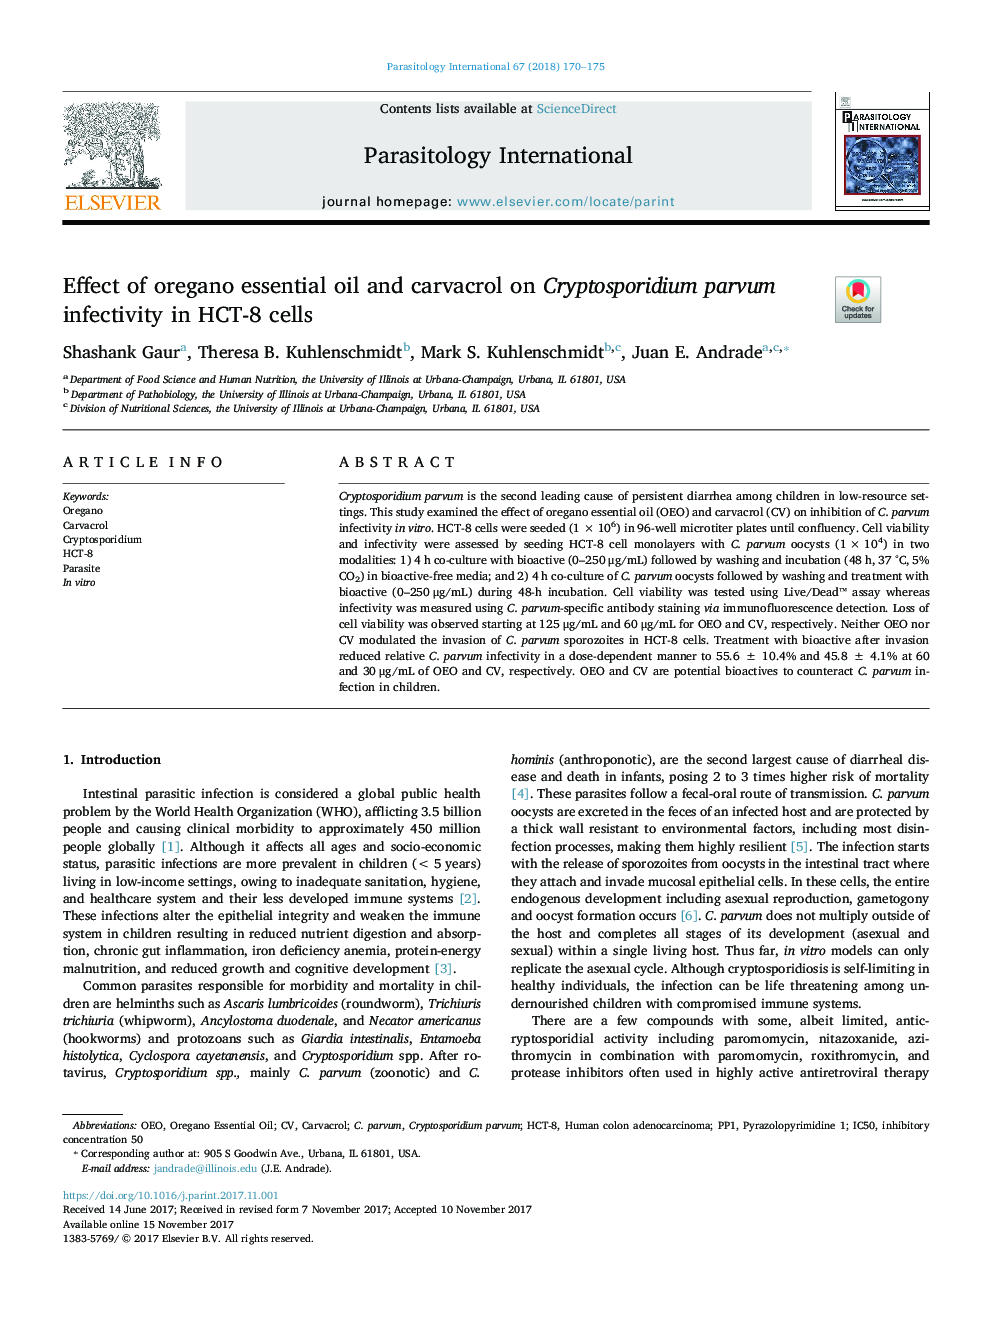 Effect of oregano essential oil and carvacrol on Cryptosporidium parvum infectivity in HCT-8 cells